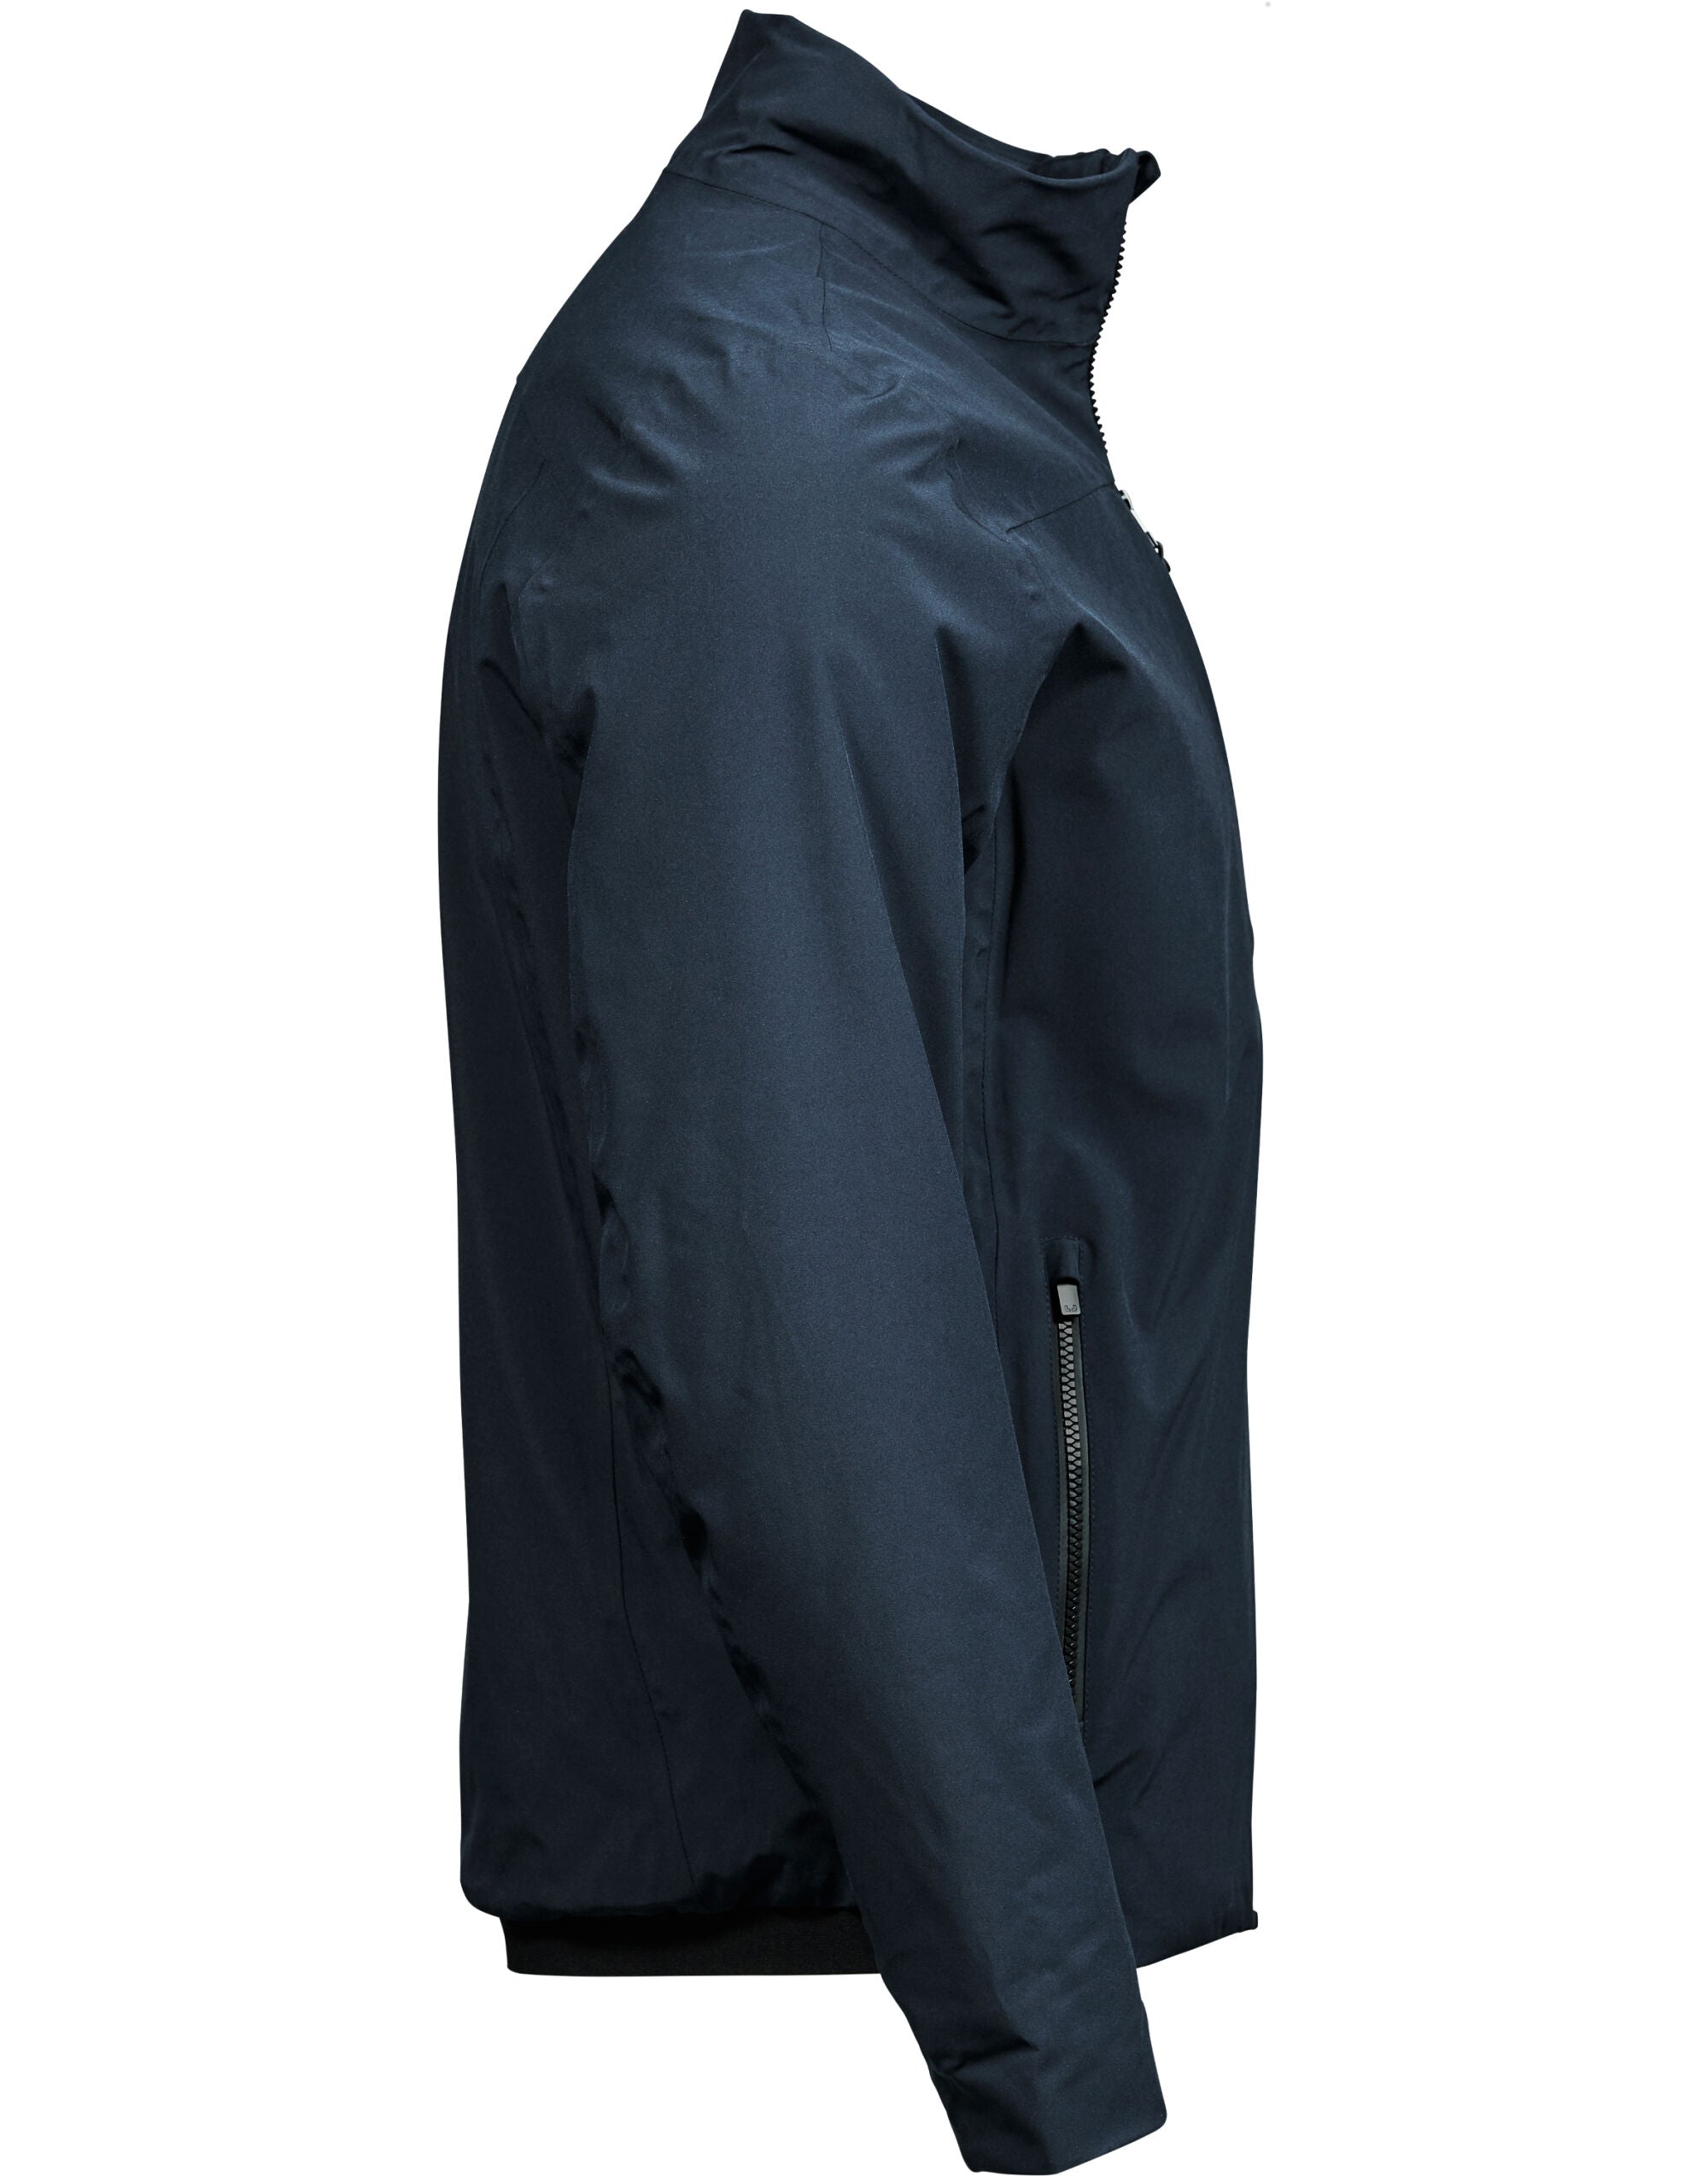 Tee Jays Men's All Weather Jacket